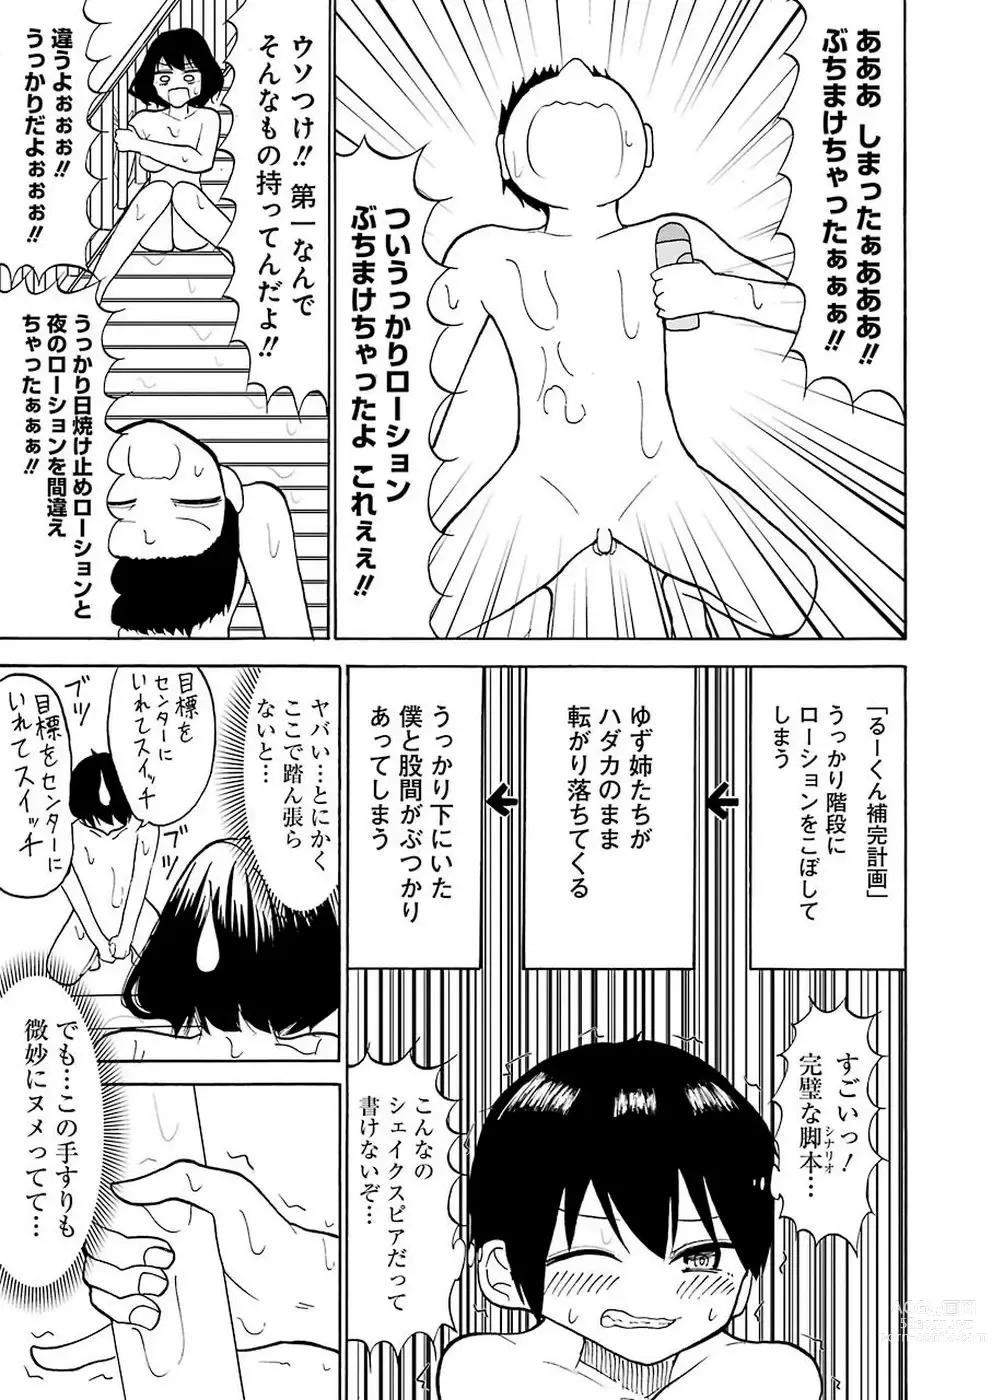 Page 24 of manga Naked Ruu-Kun